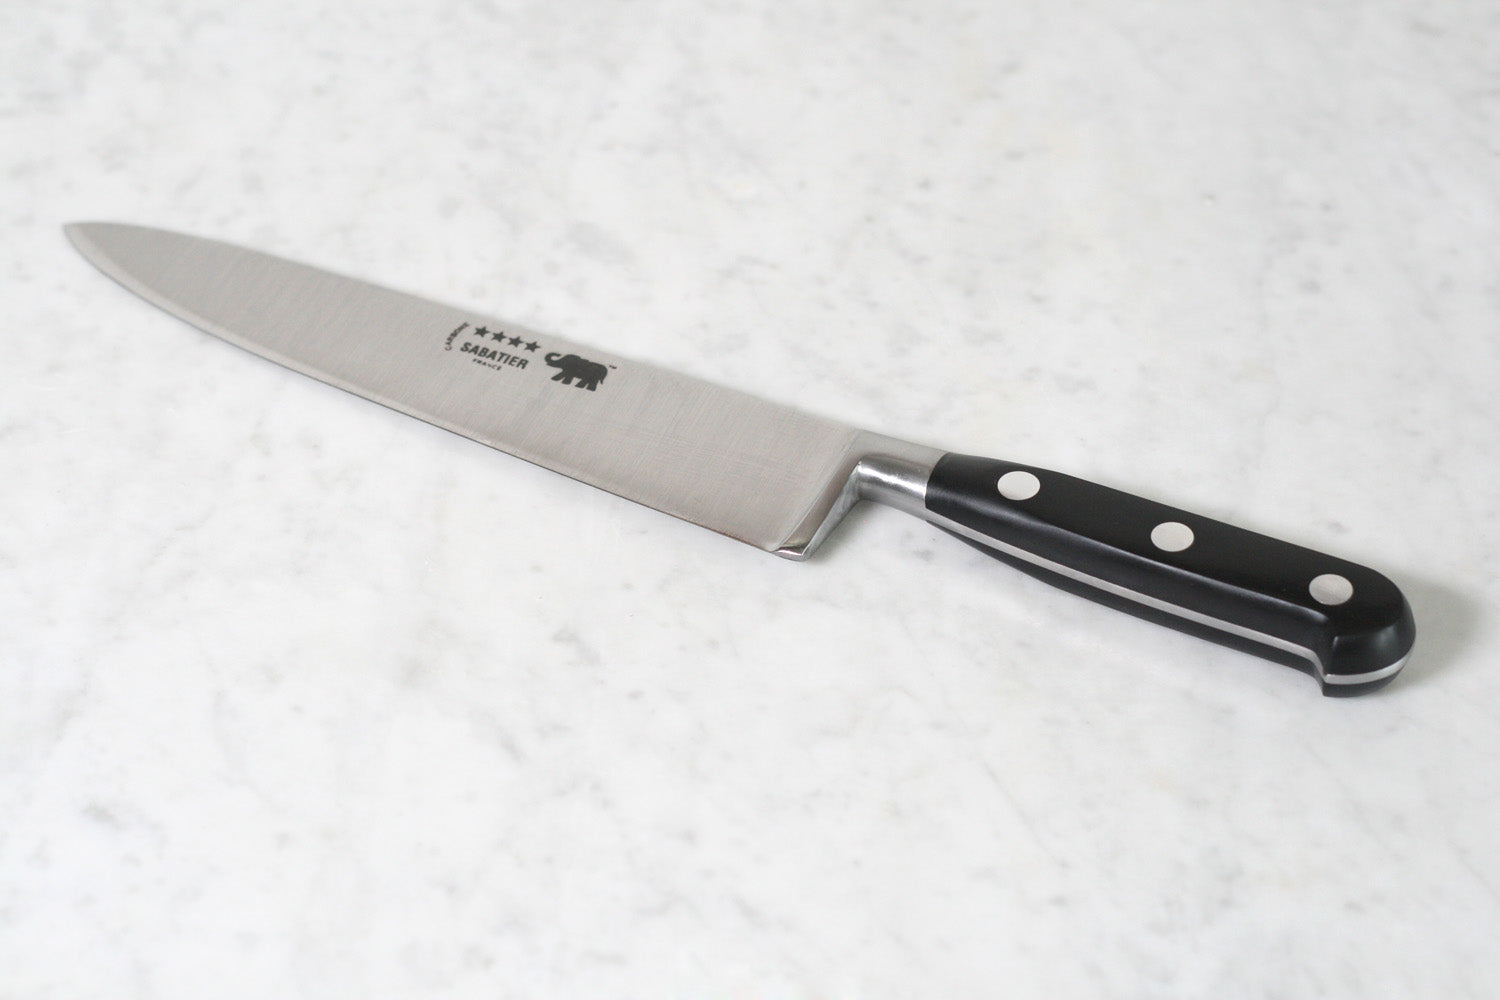  chef knife 8 Inch - kitchen knife European steel